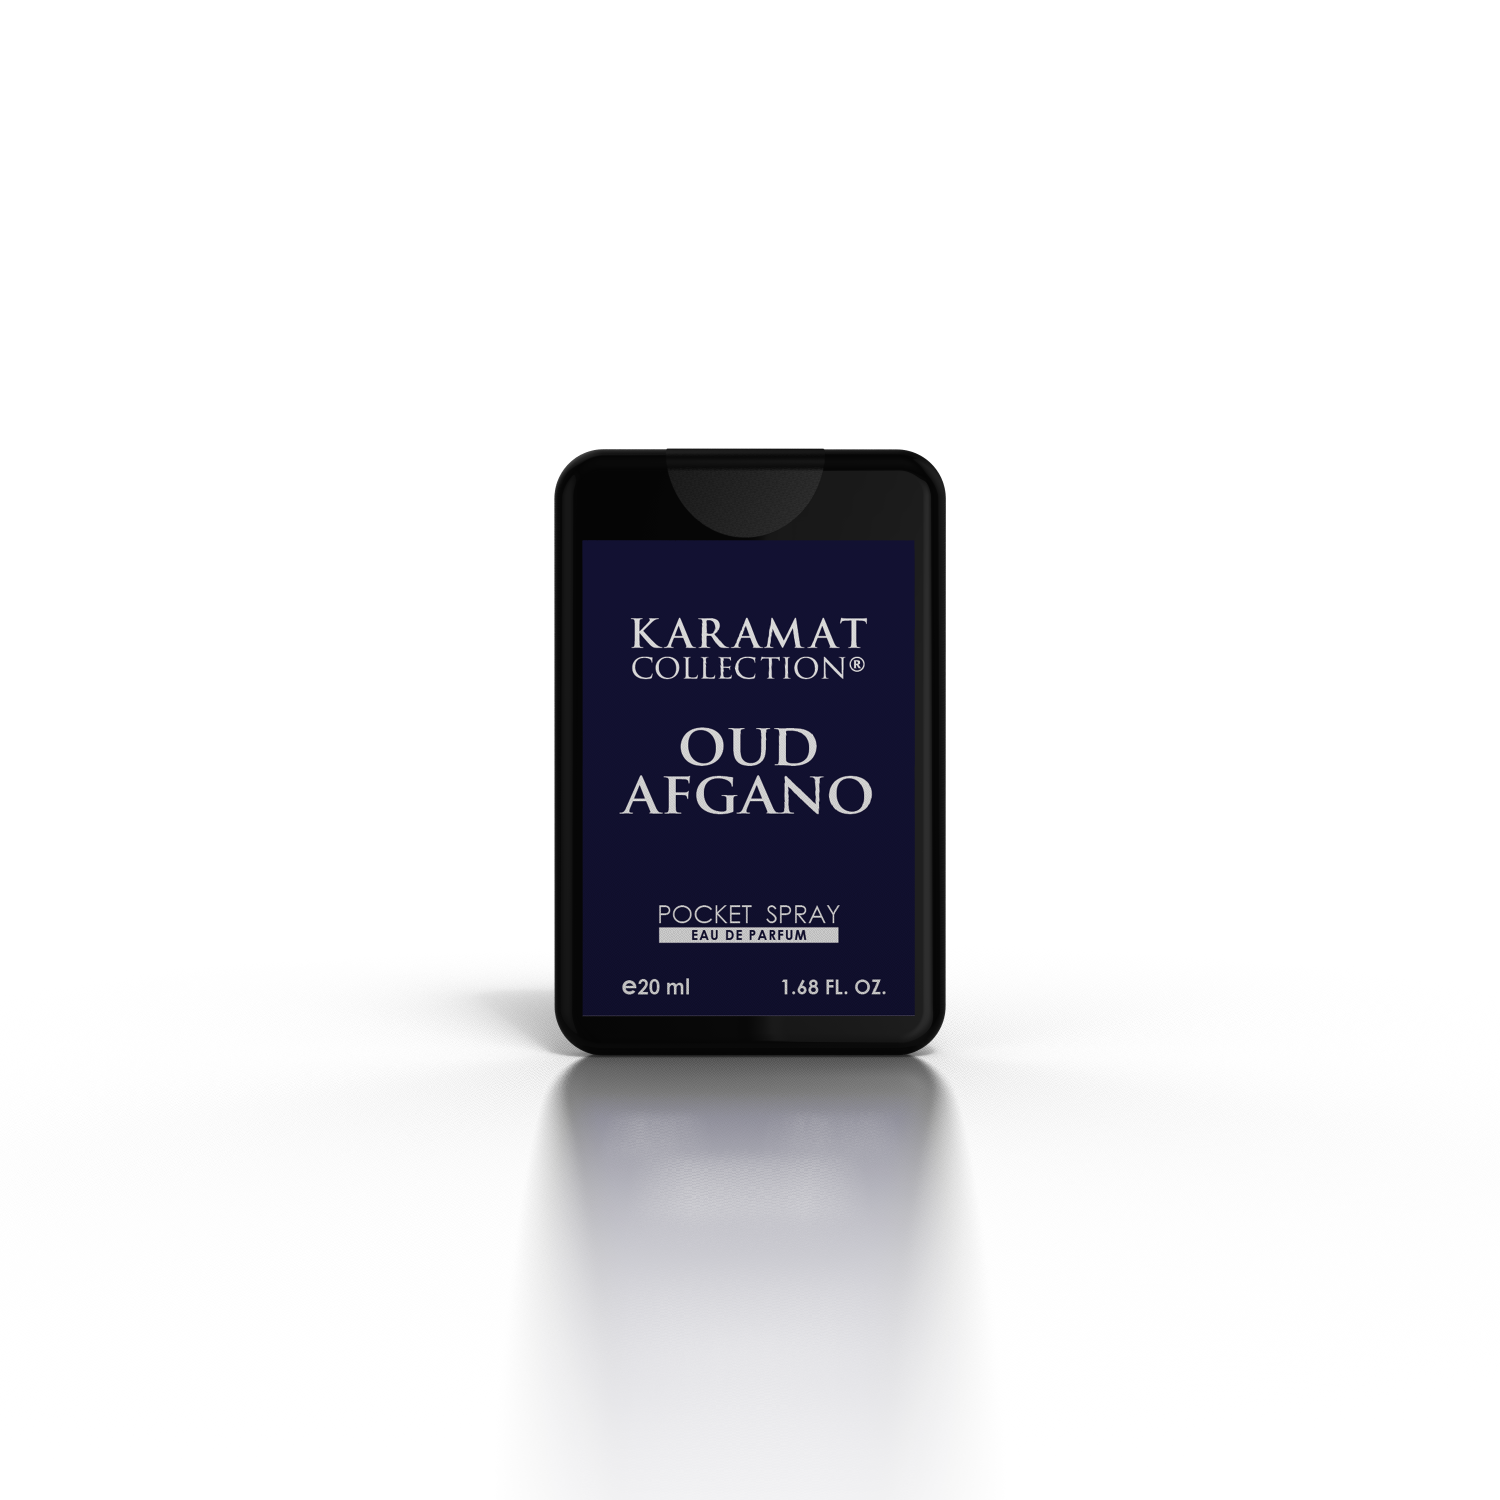 oud-afgano-parfum-de-poche-20ml-karamat-collection